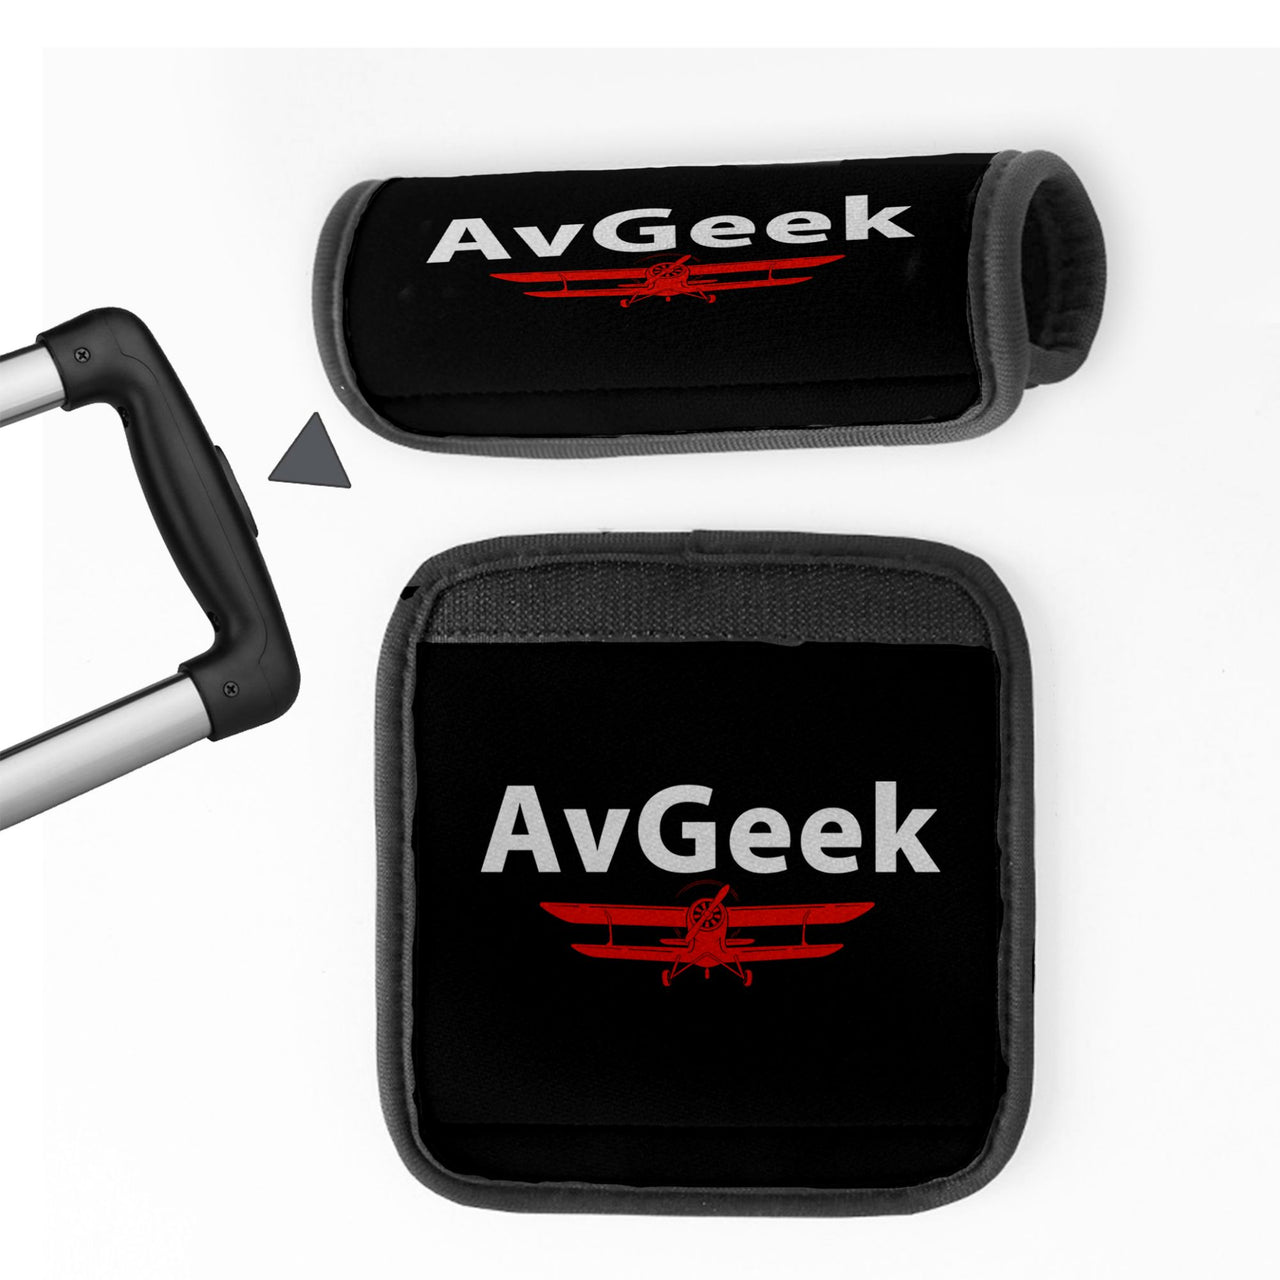 Avgeek Designed Neoprene Luggage Handle Covers